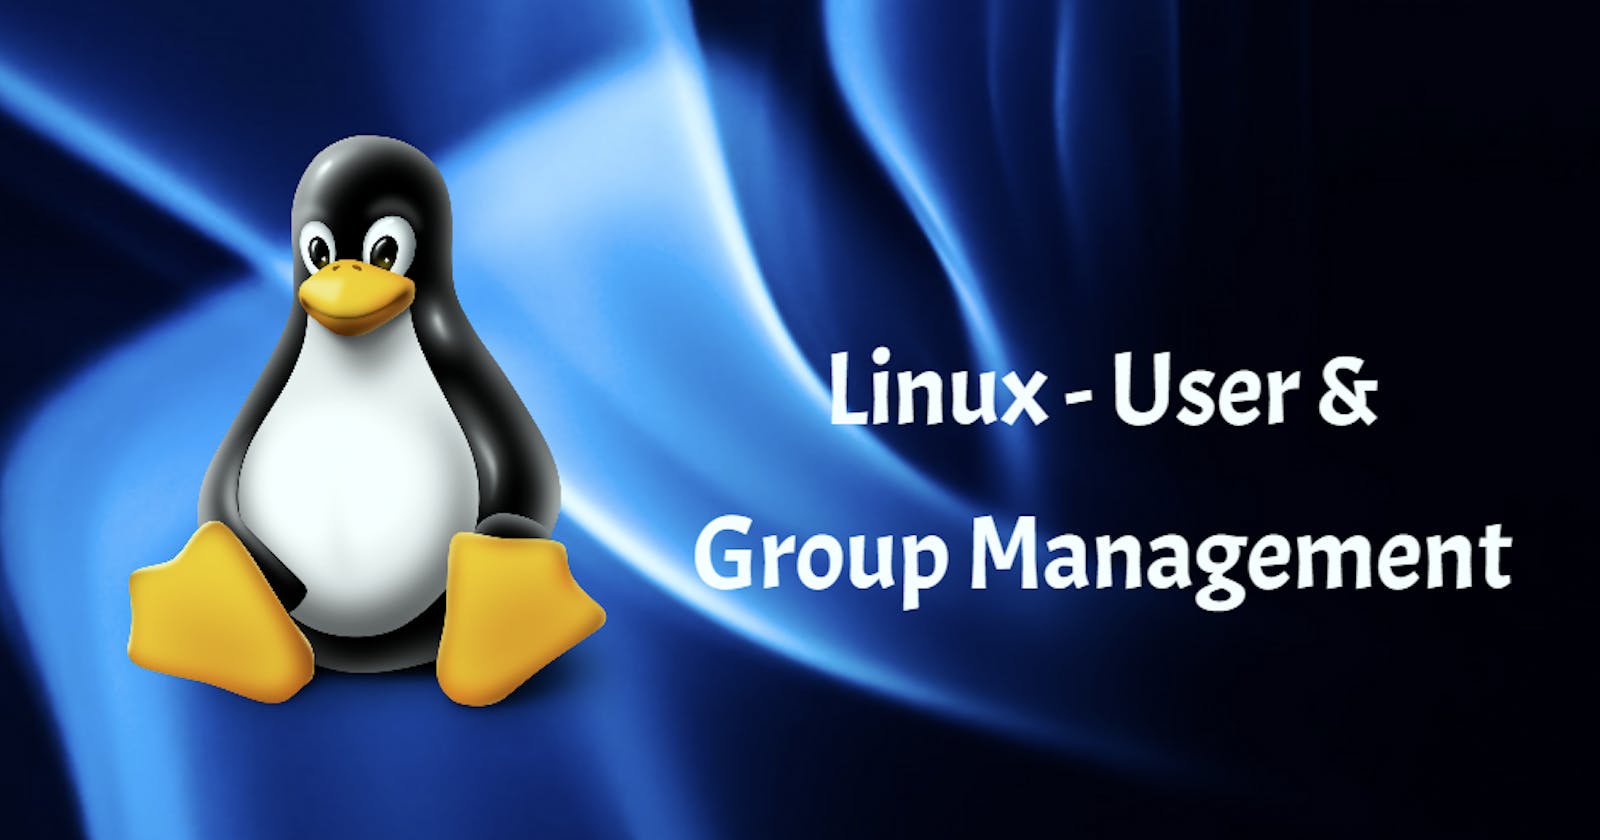 Linux - User & Group Management